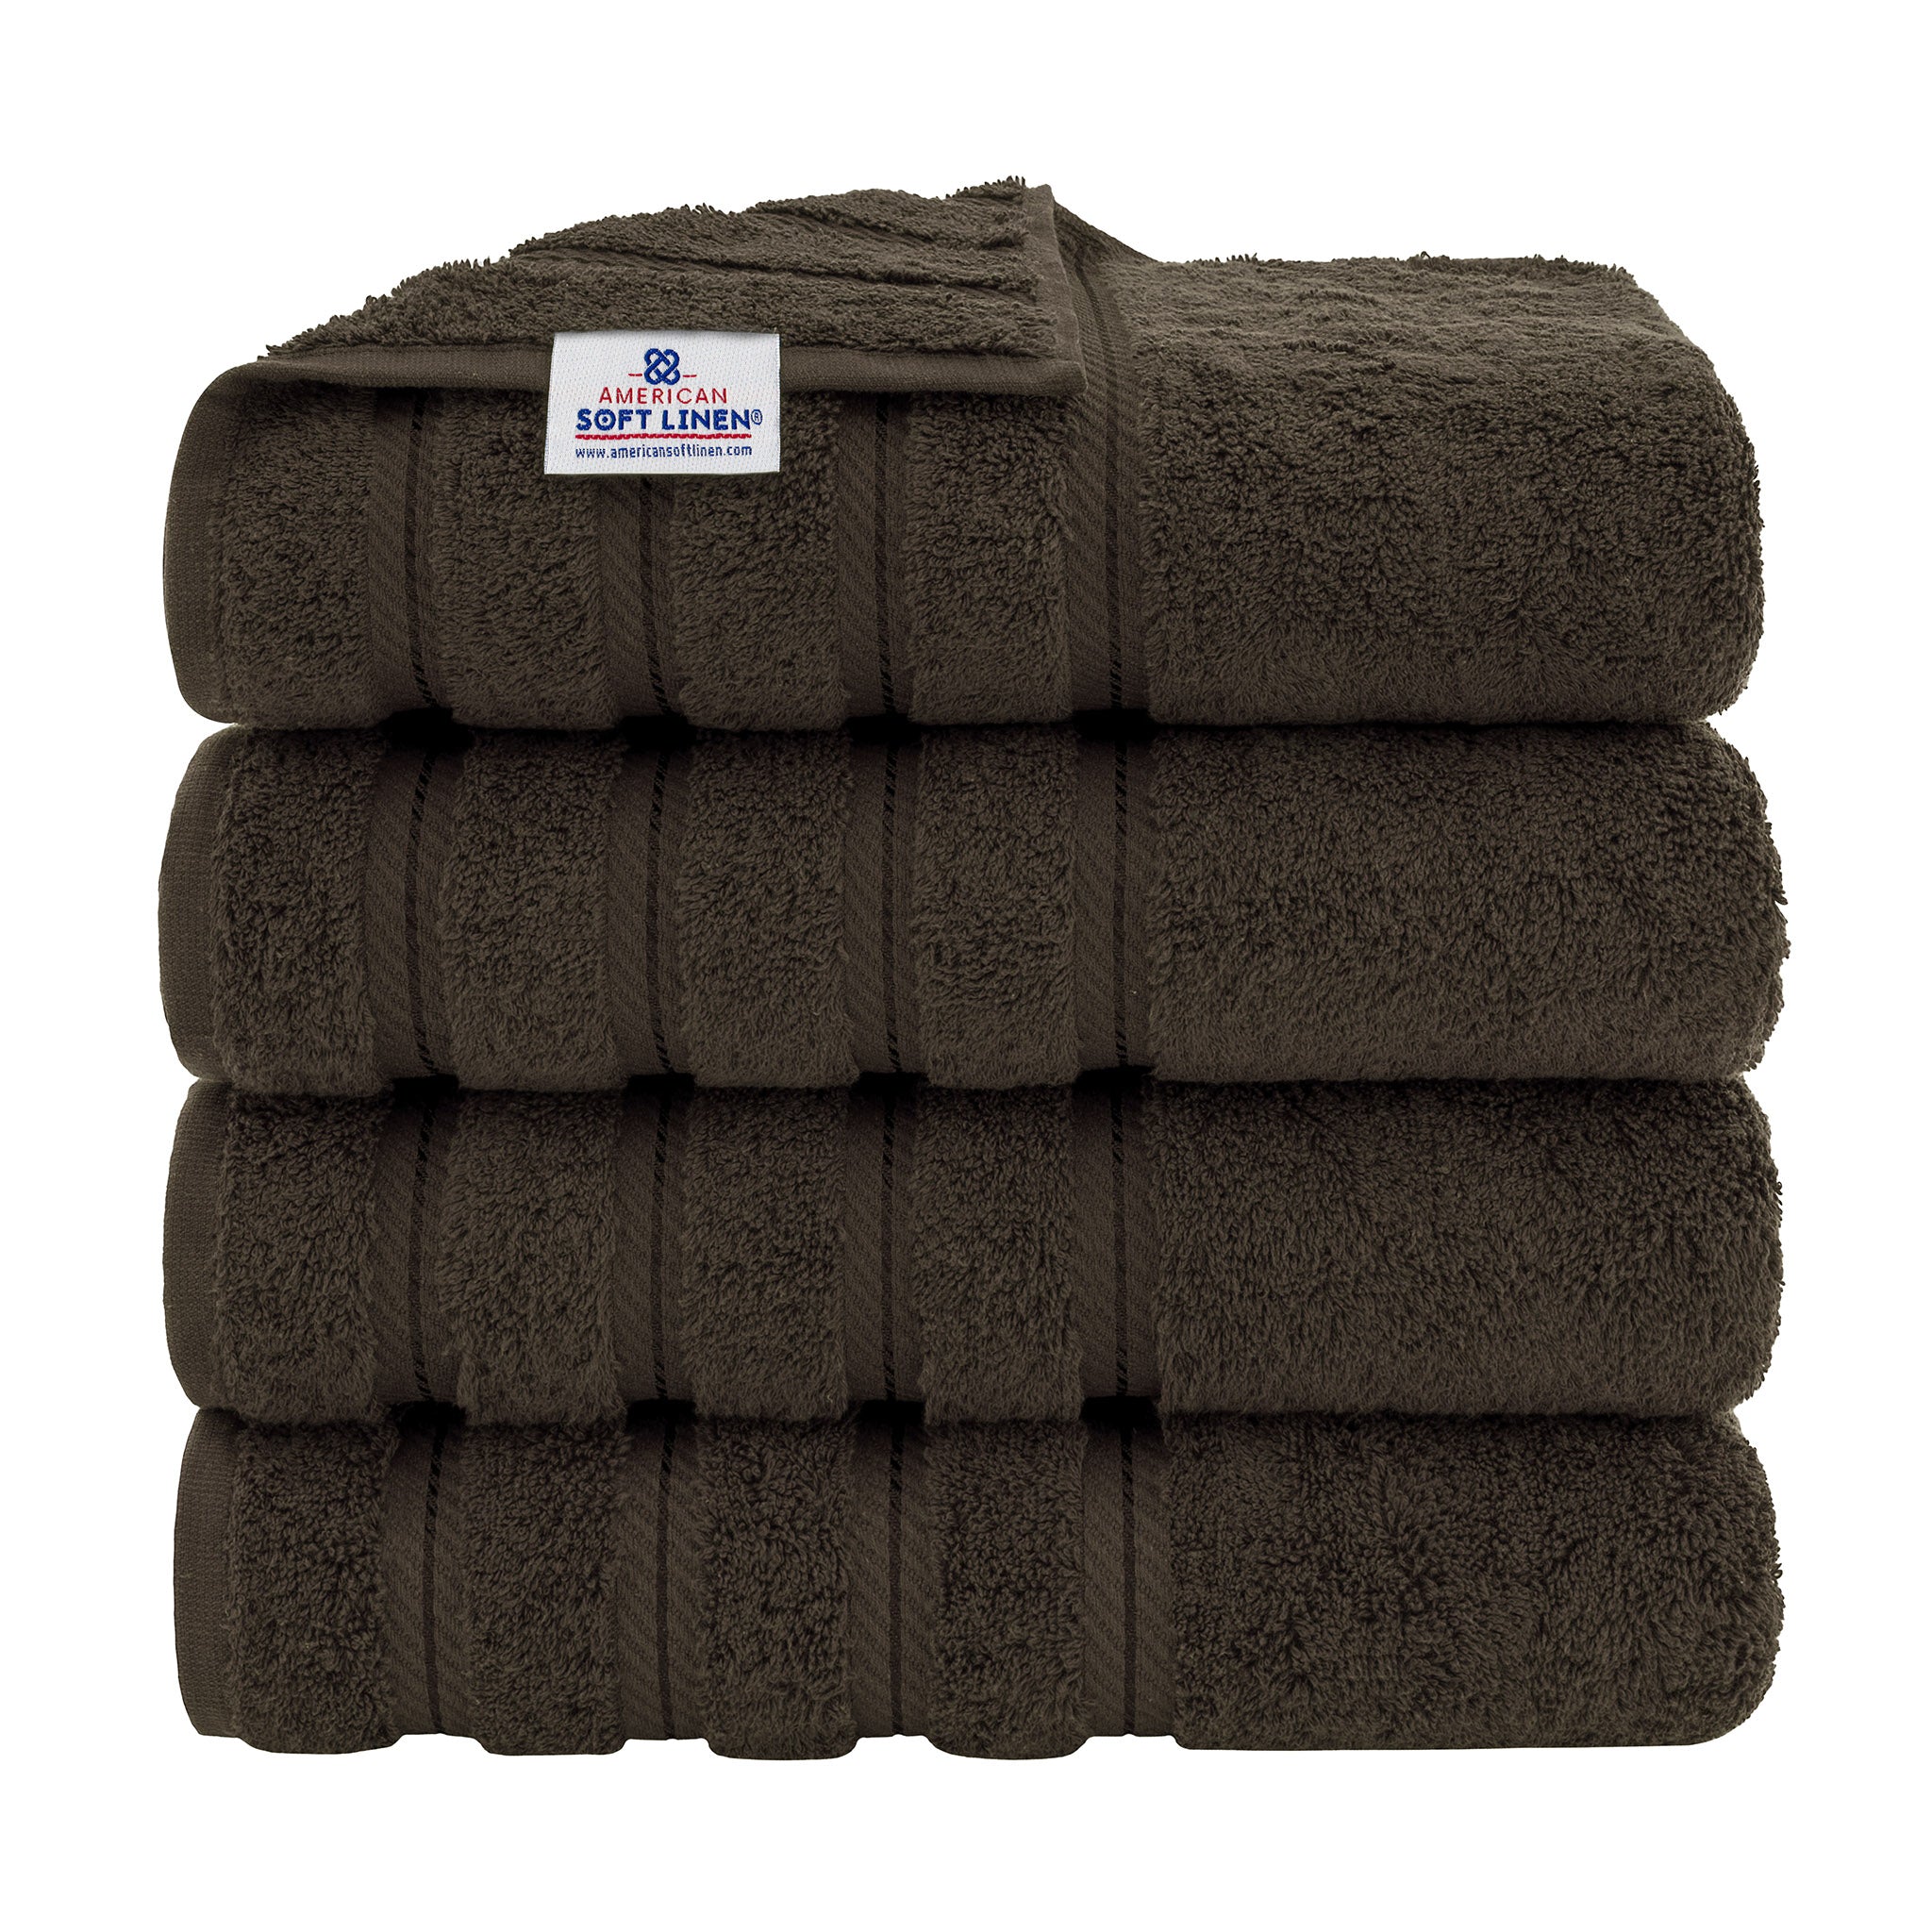 American Soft Linen 100% Turkish Cotton 4 Pack Bath Towel Set chocolate-brown-1